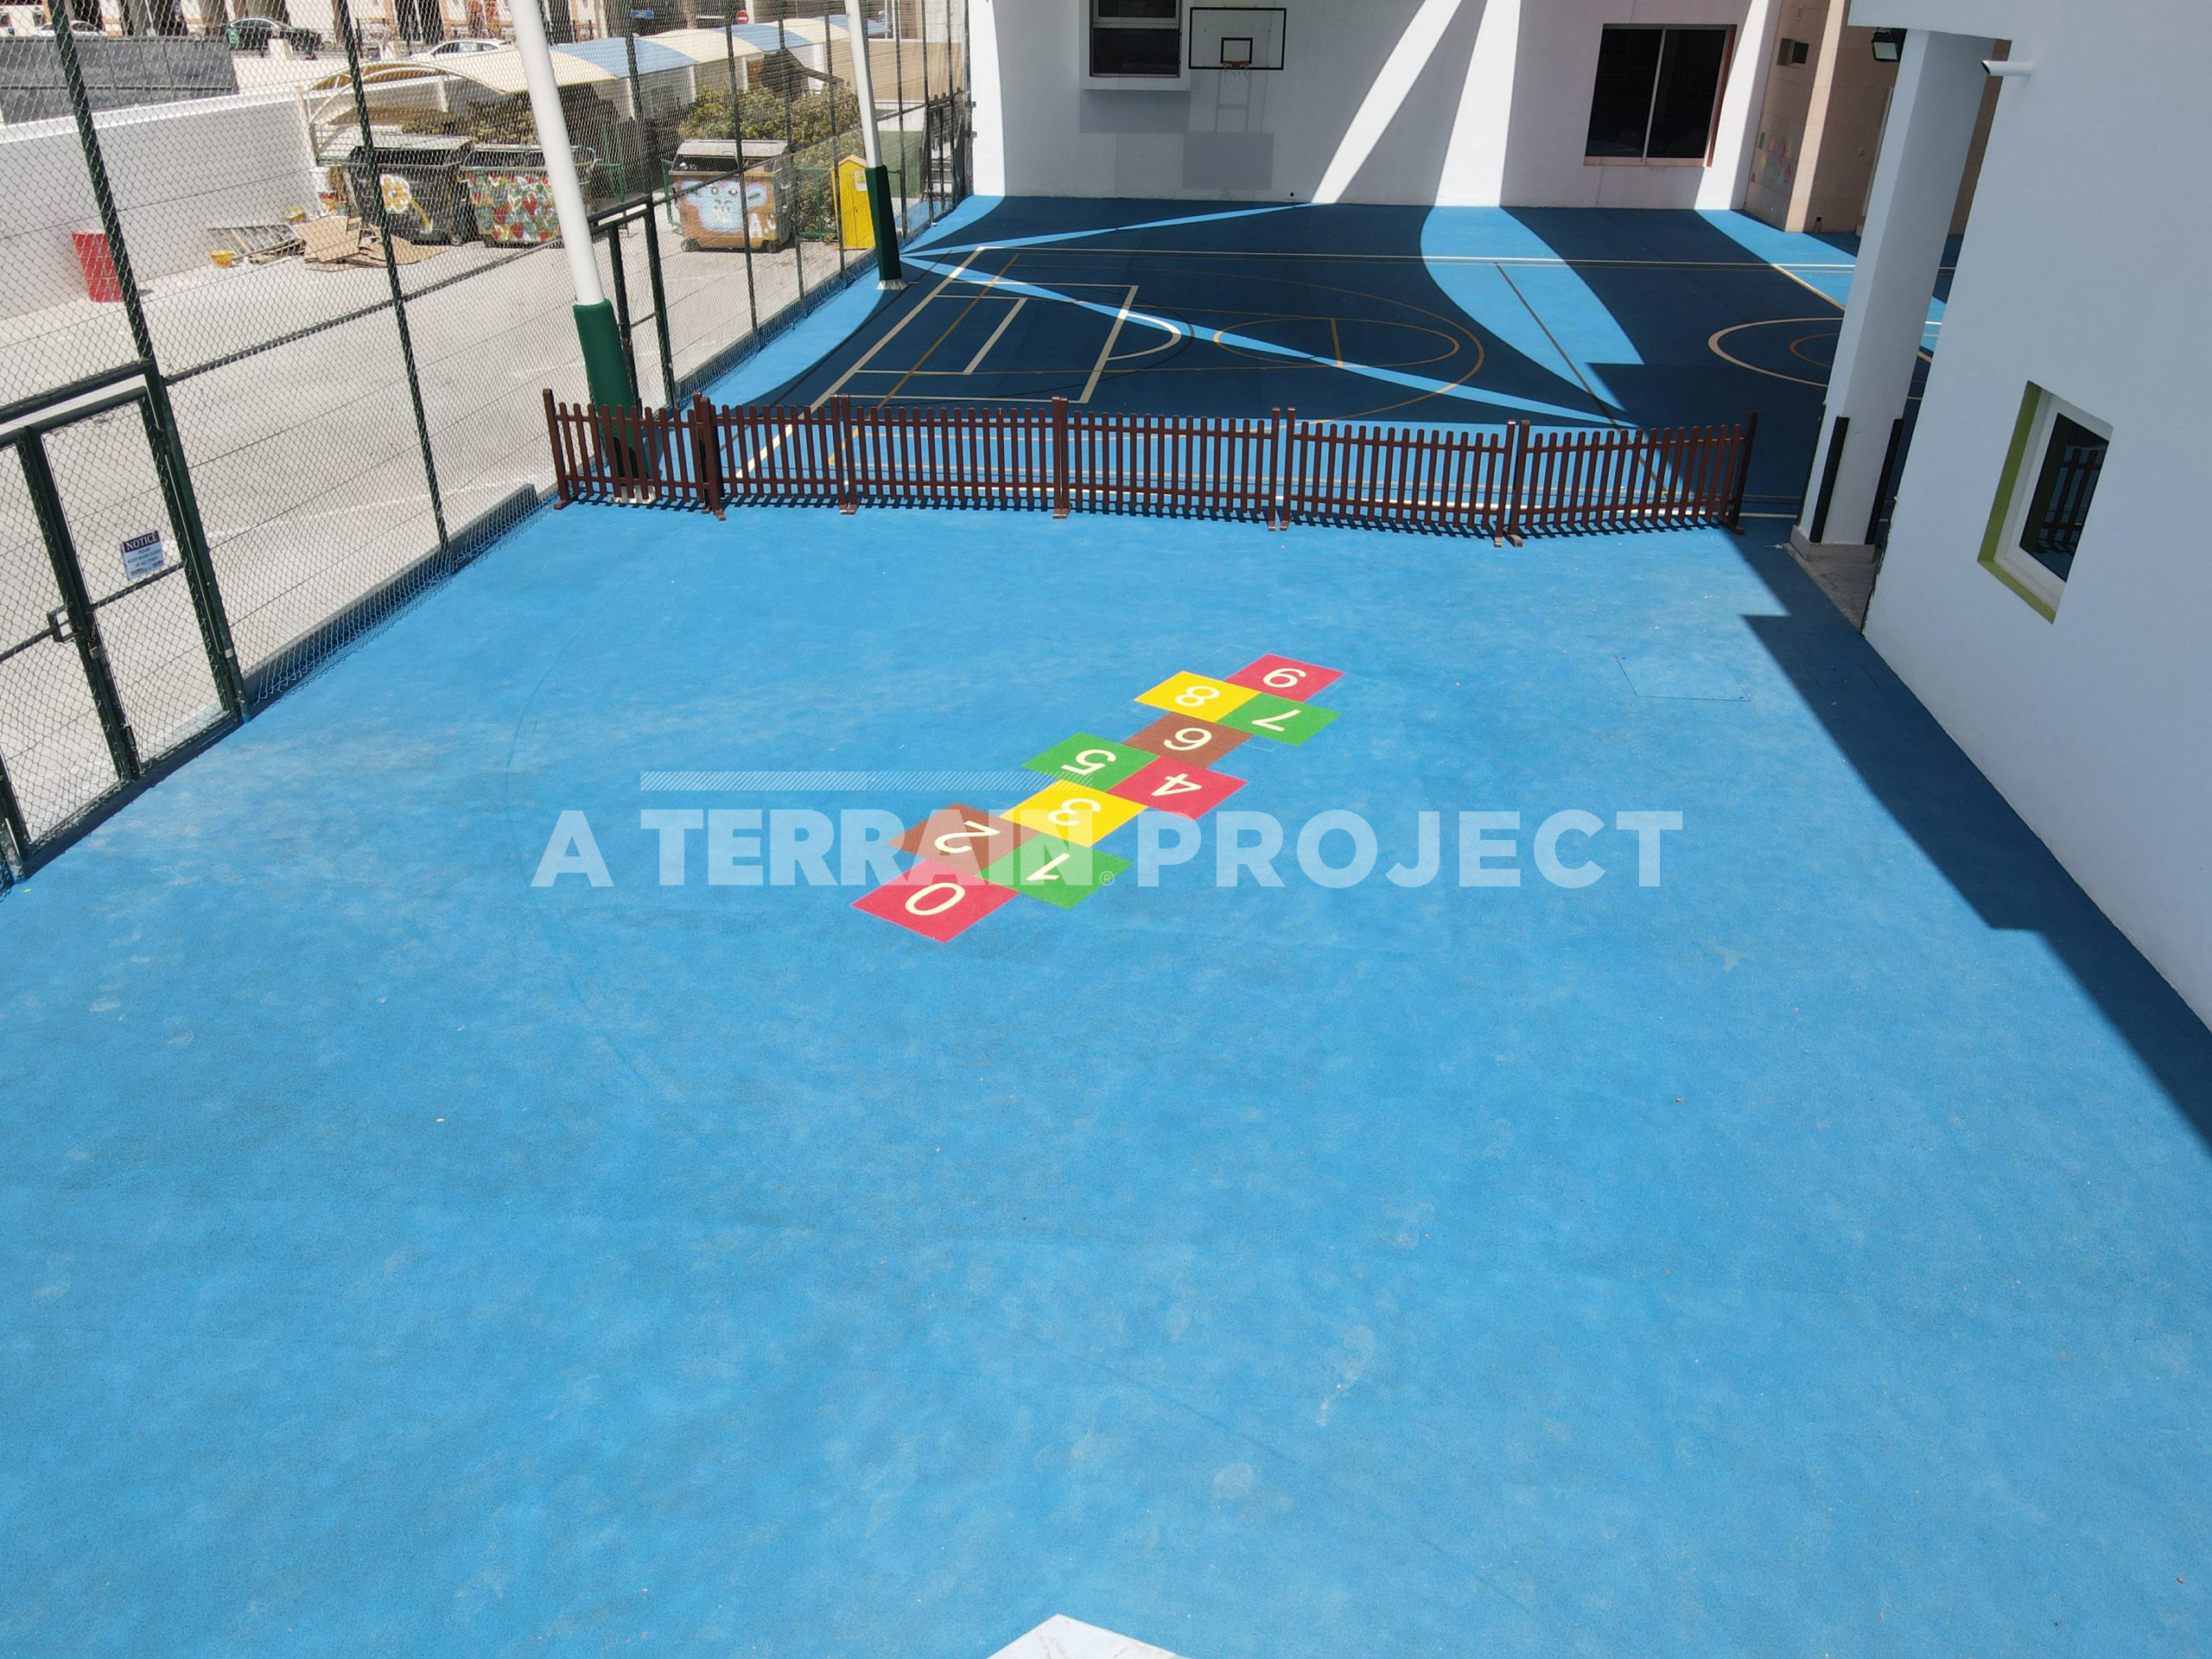 Terrain Floorings Victory Heights School Dubai Project